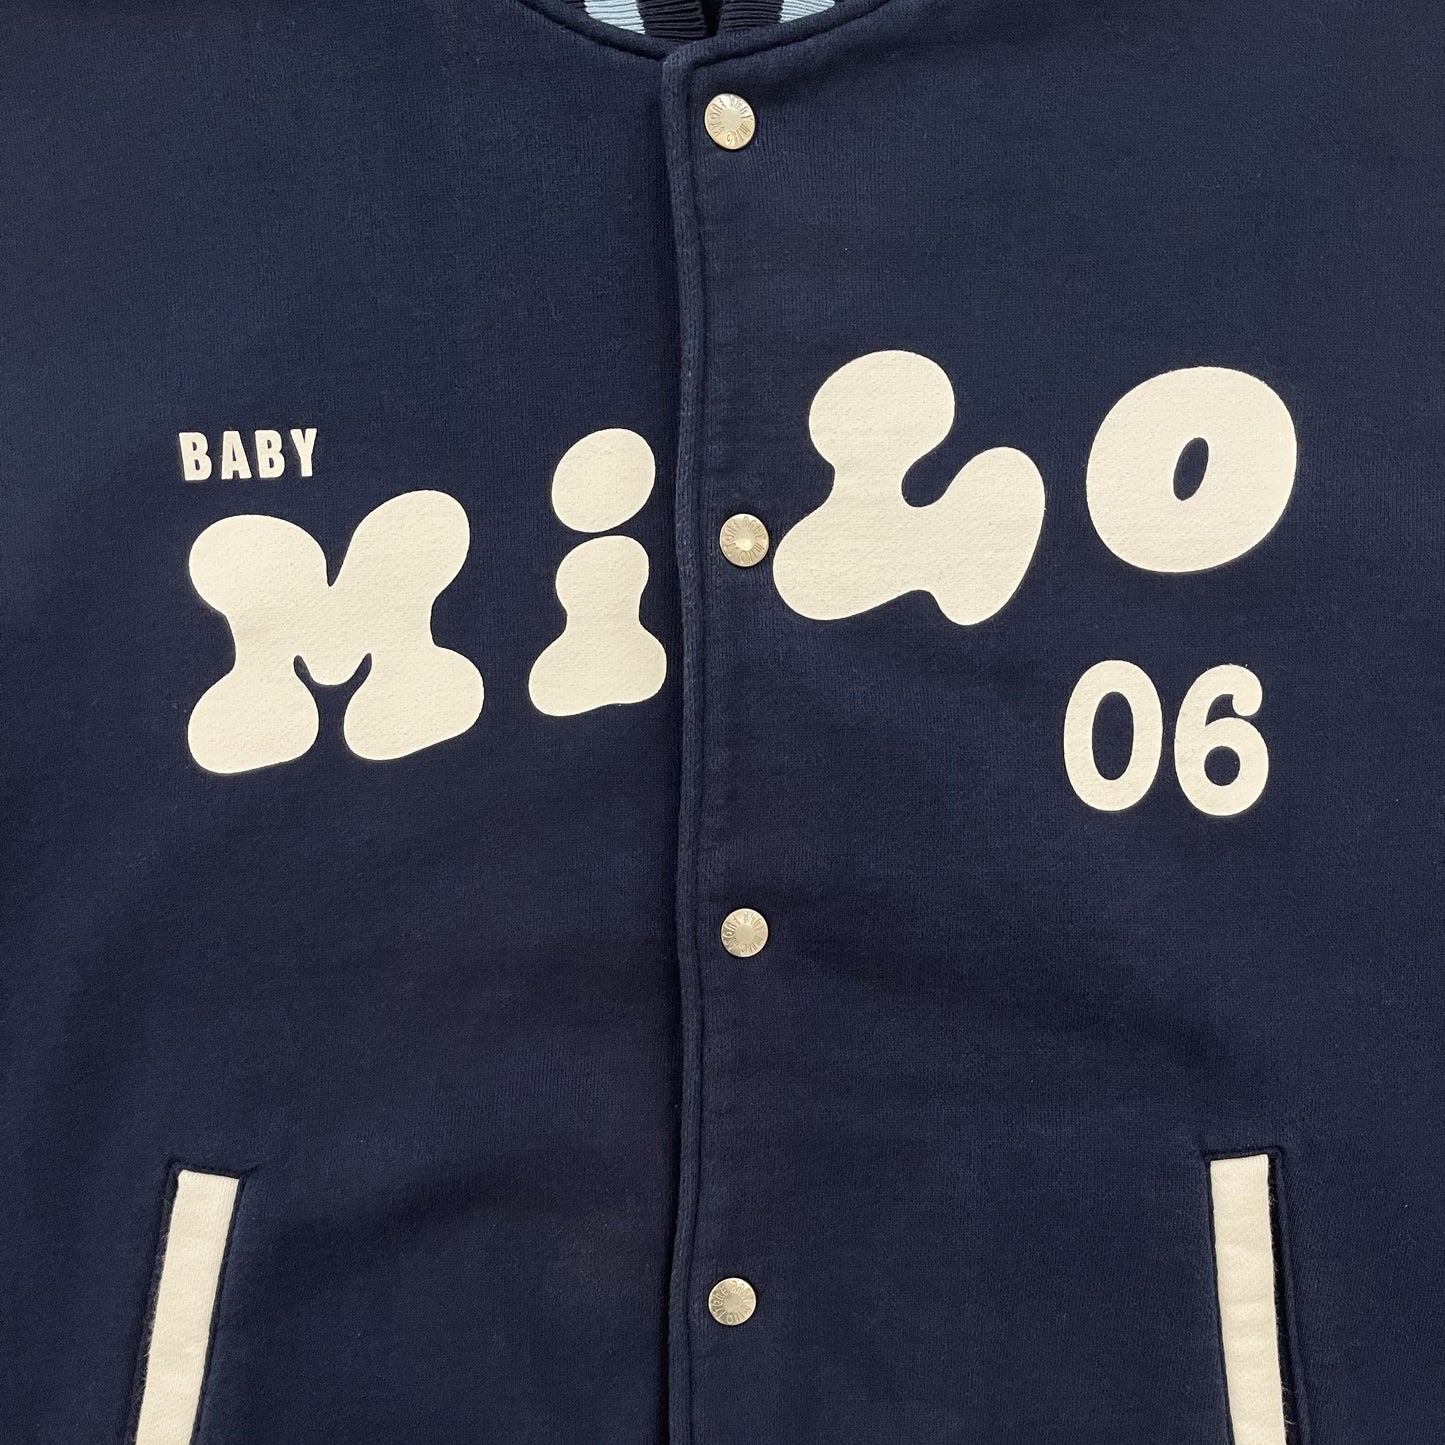 Baby Milo 2006 Varsity Jacket